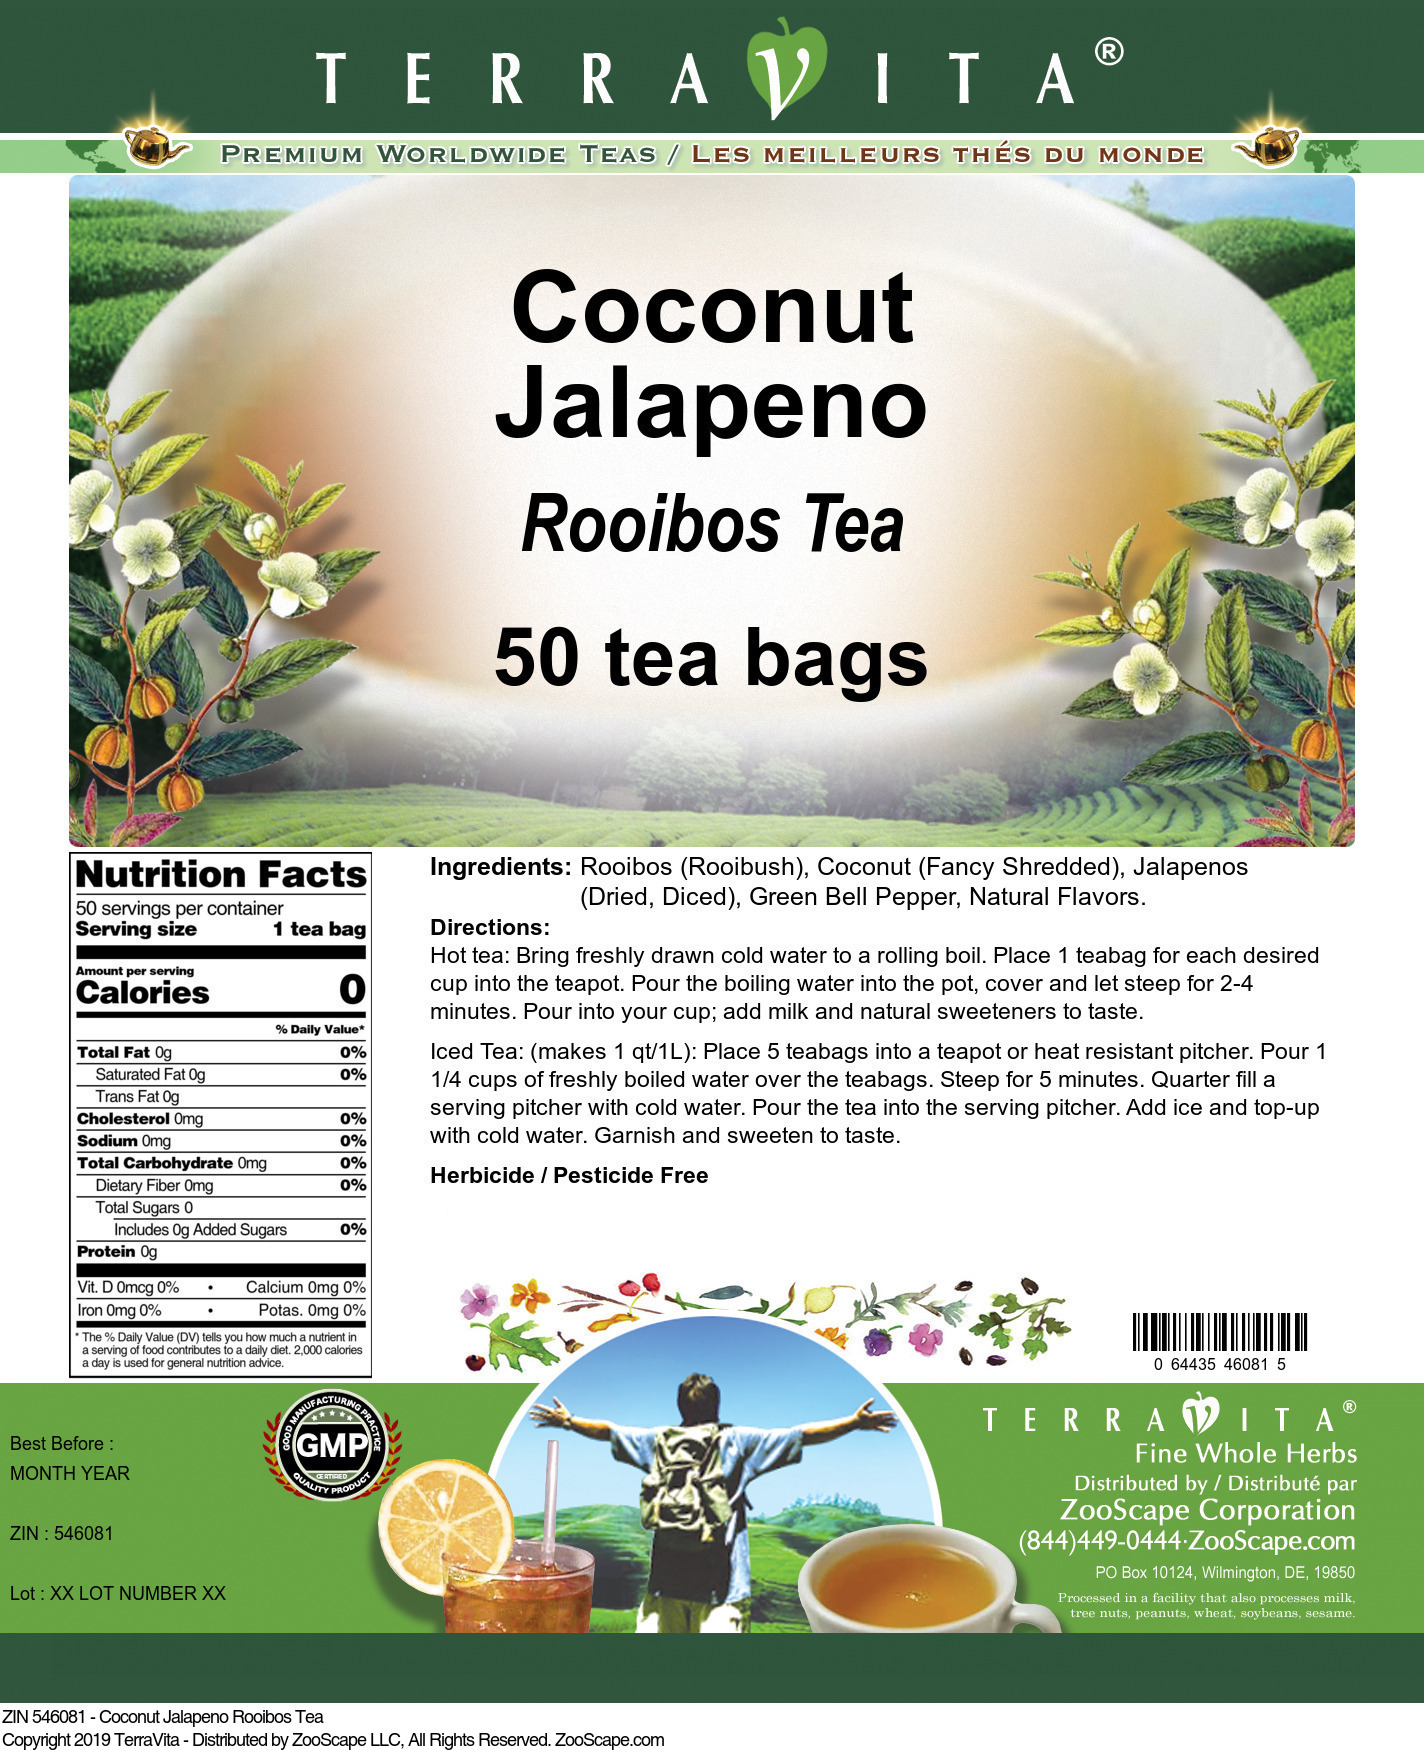 Coconut Jalapeno Rooibos Tea - Label